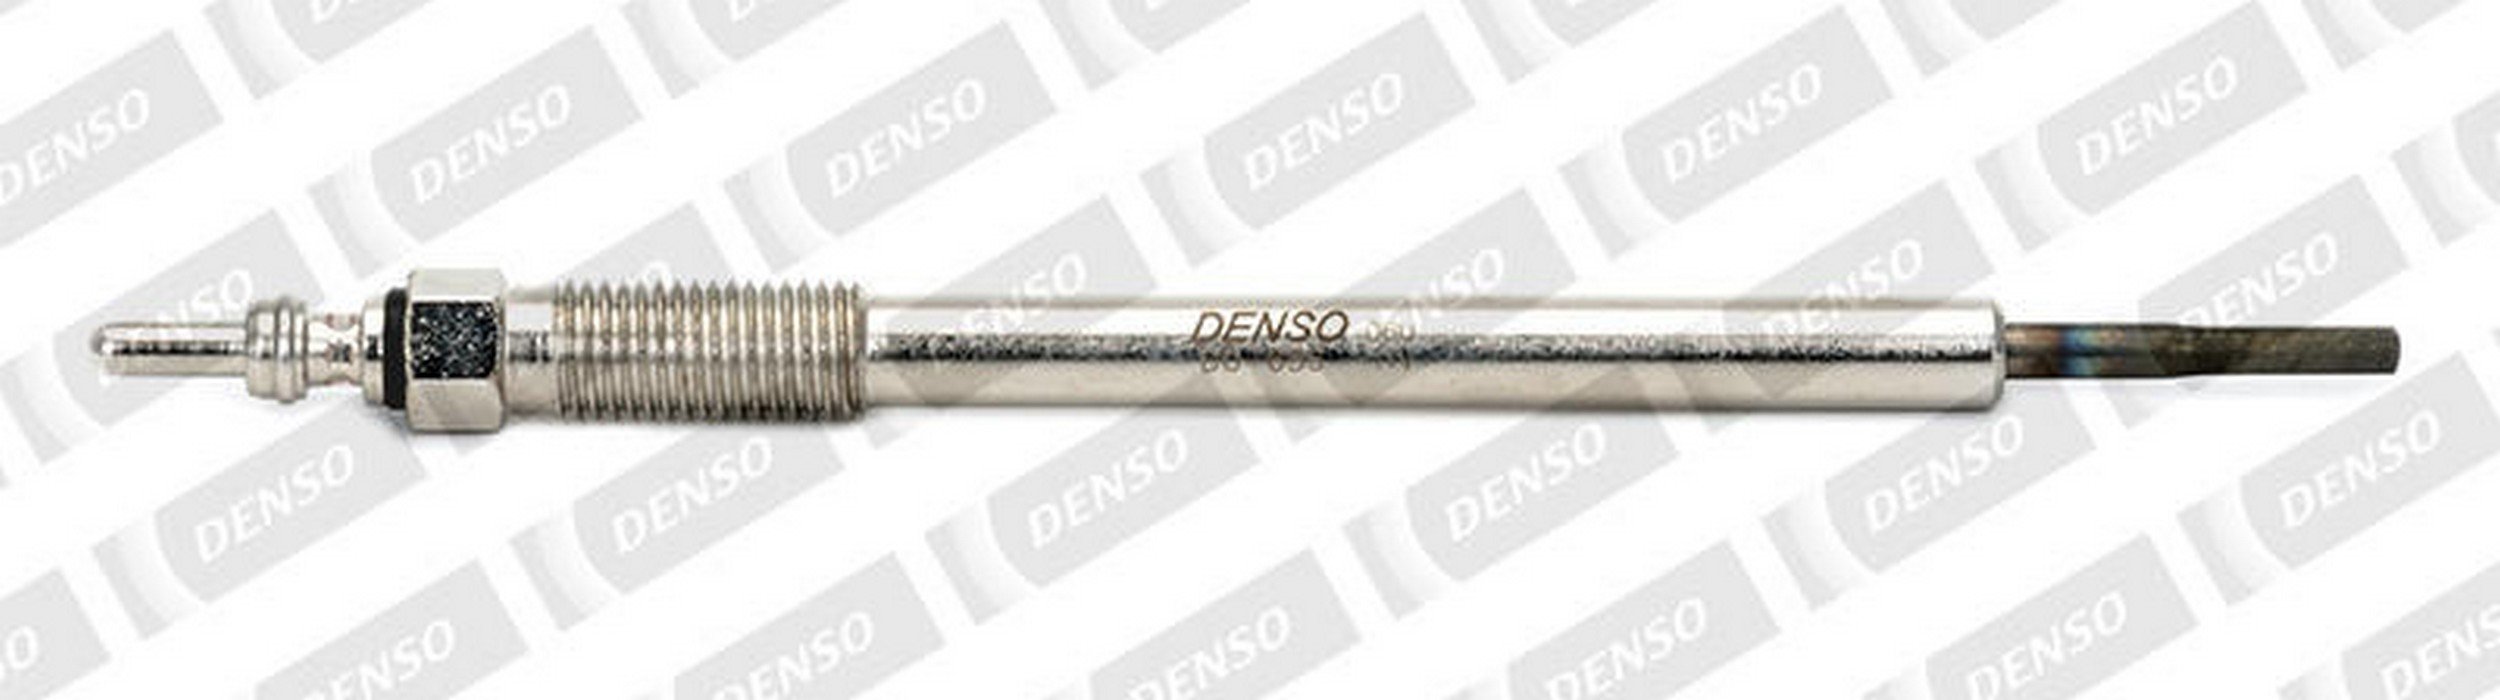 DENSO-AU DG-656